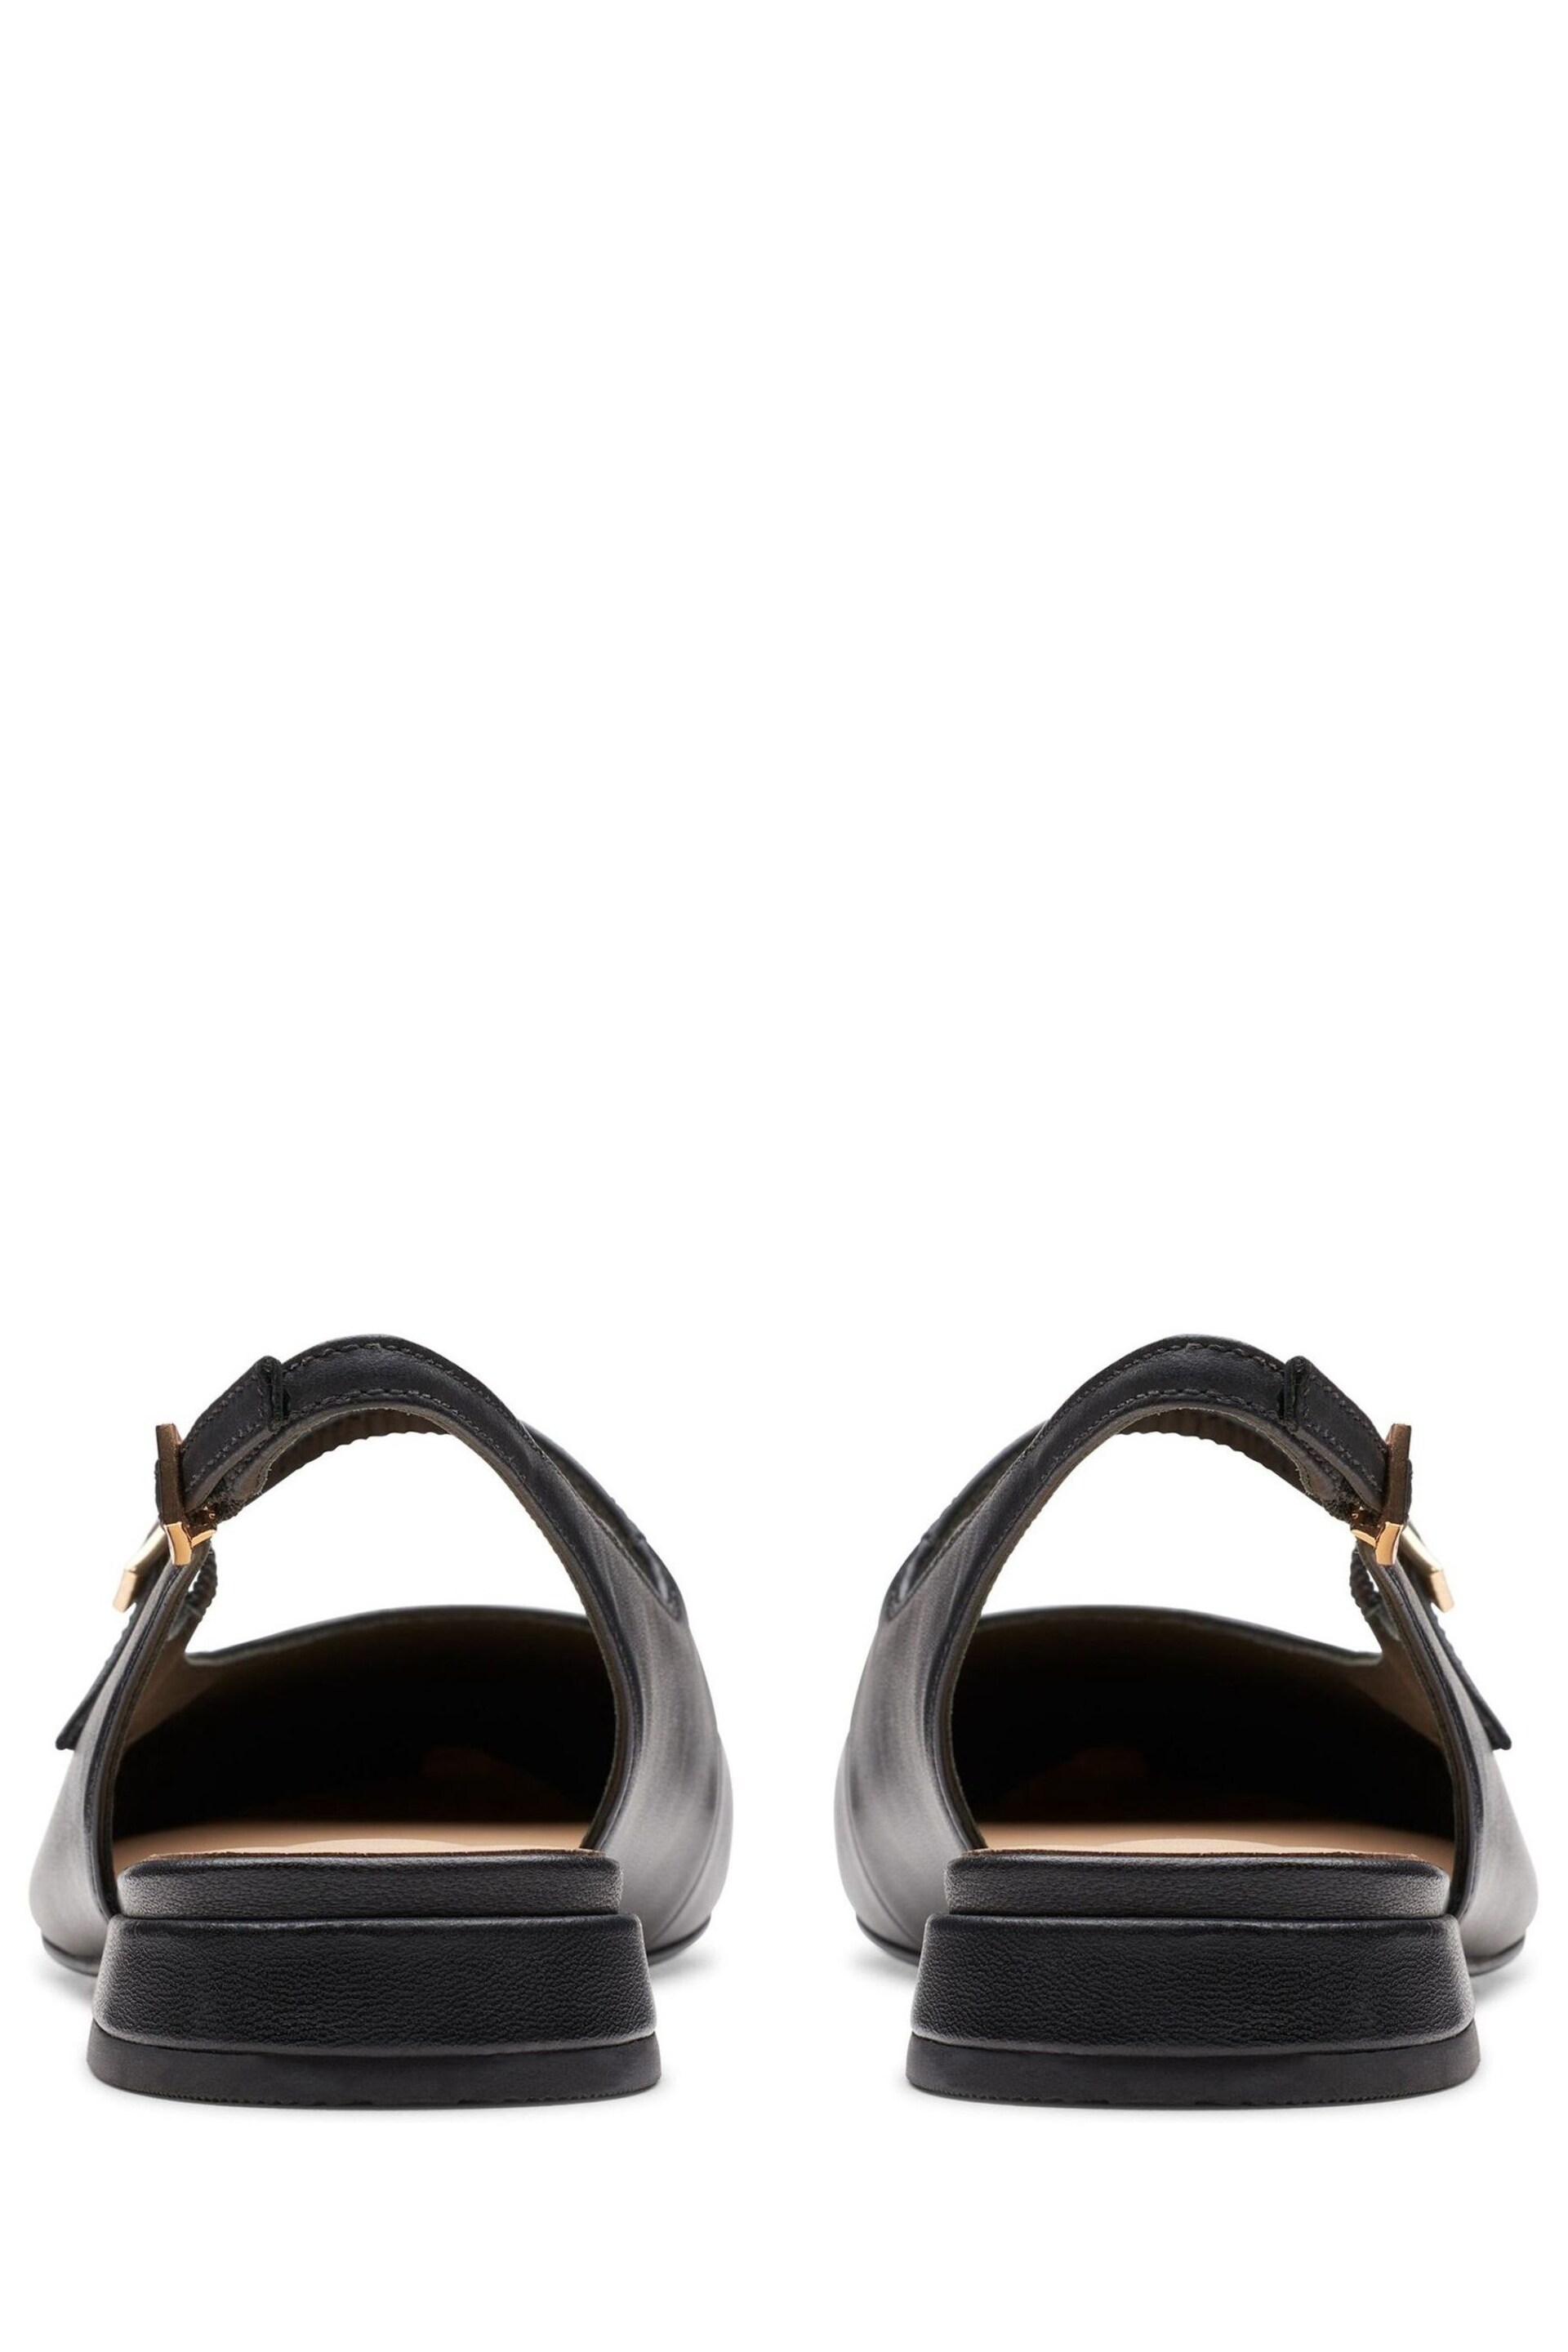 Clarks Black Leather Sensa 15 Sligback Shoes - Image 5 of 7